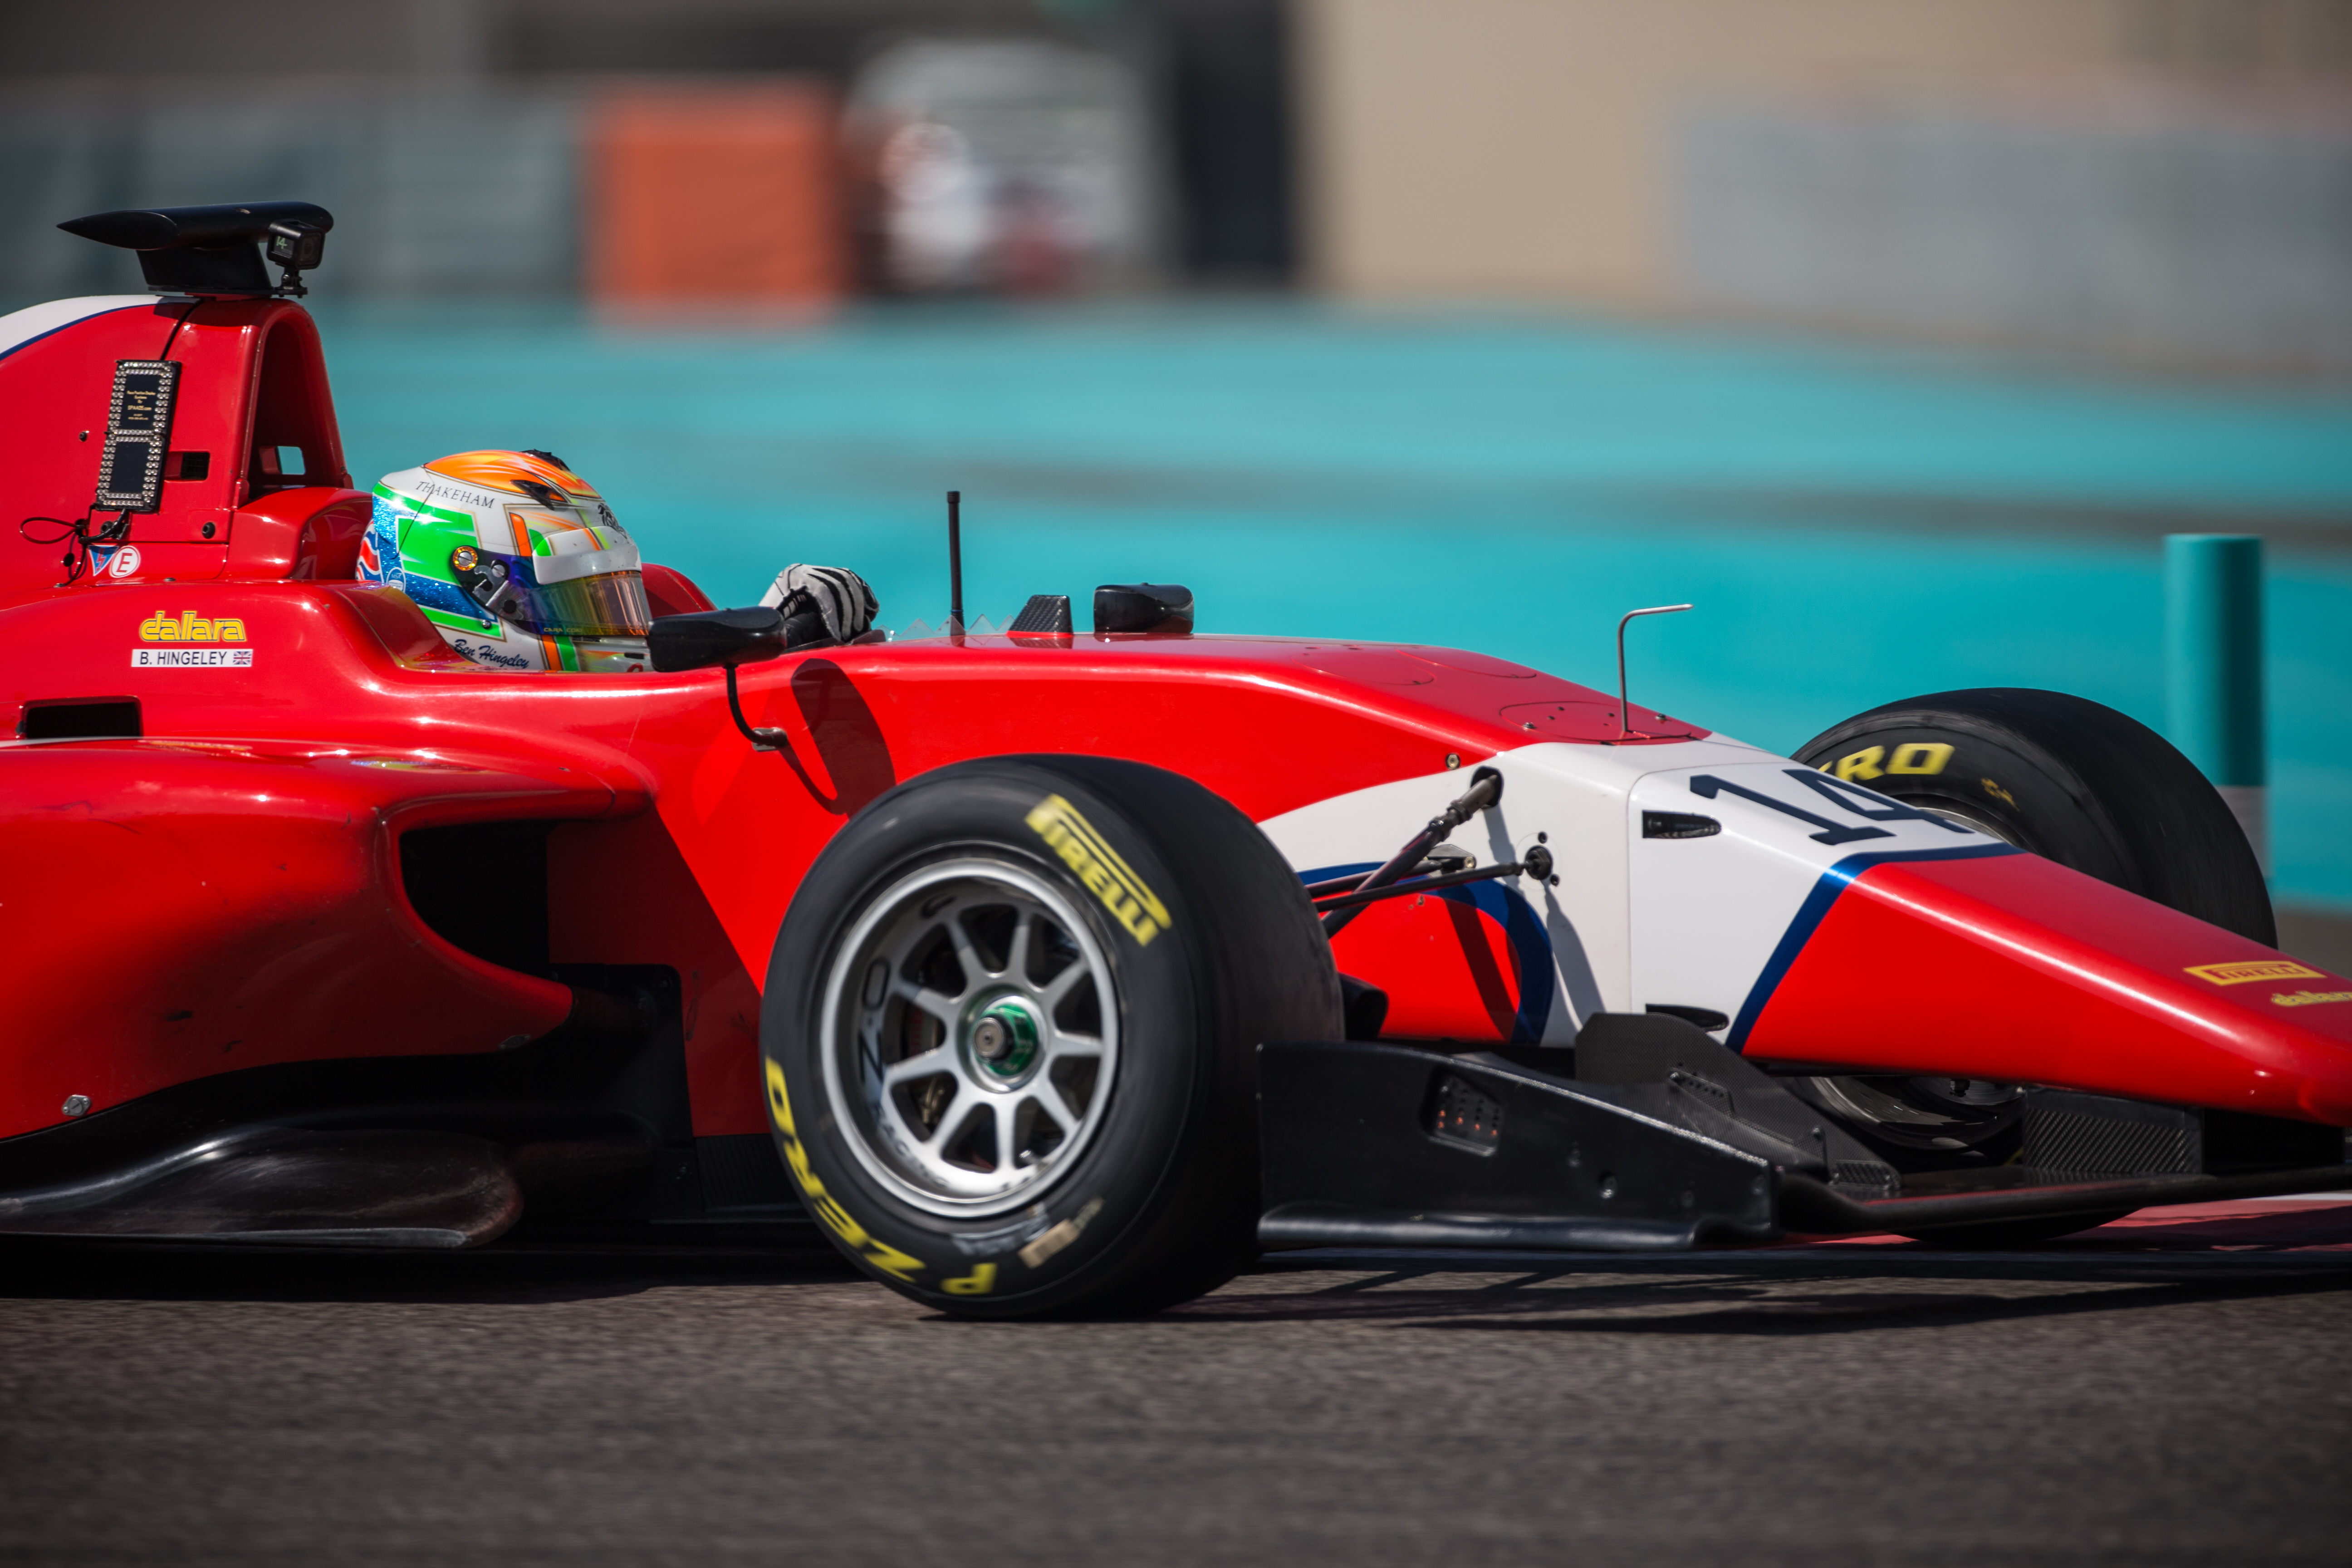 Ben Set for 2018 GP3 Test in Abu Dhabi